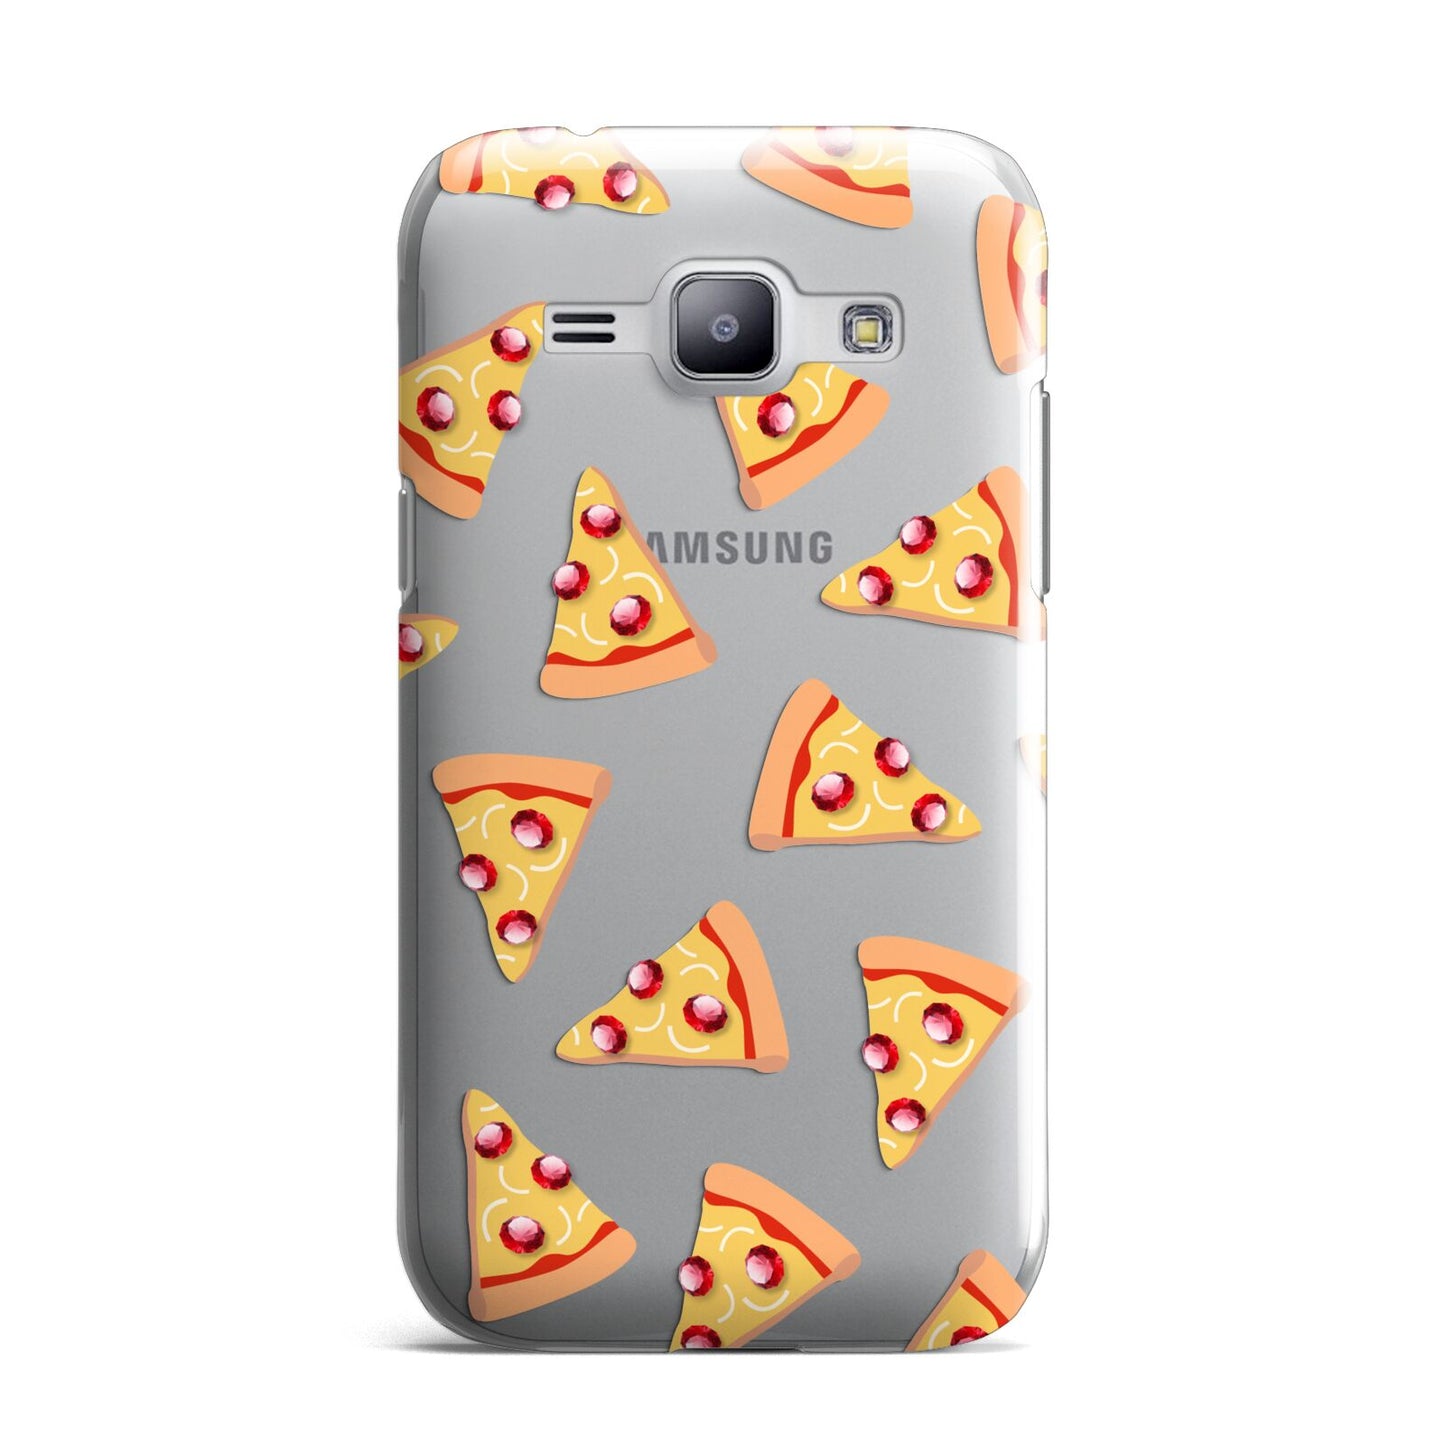 Rubies on Cartoon Pizza Slices Samsung Galaxy J1 2015 Case